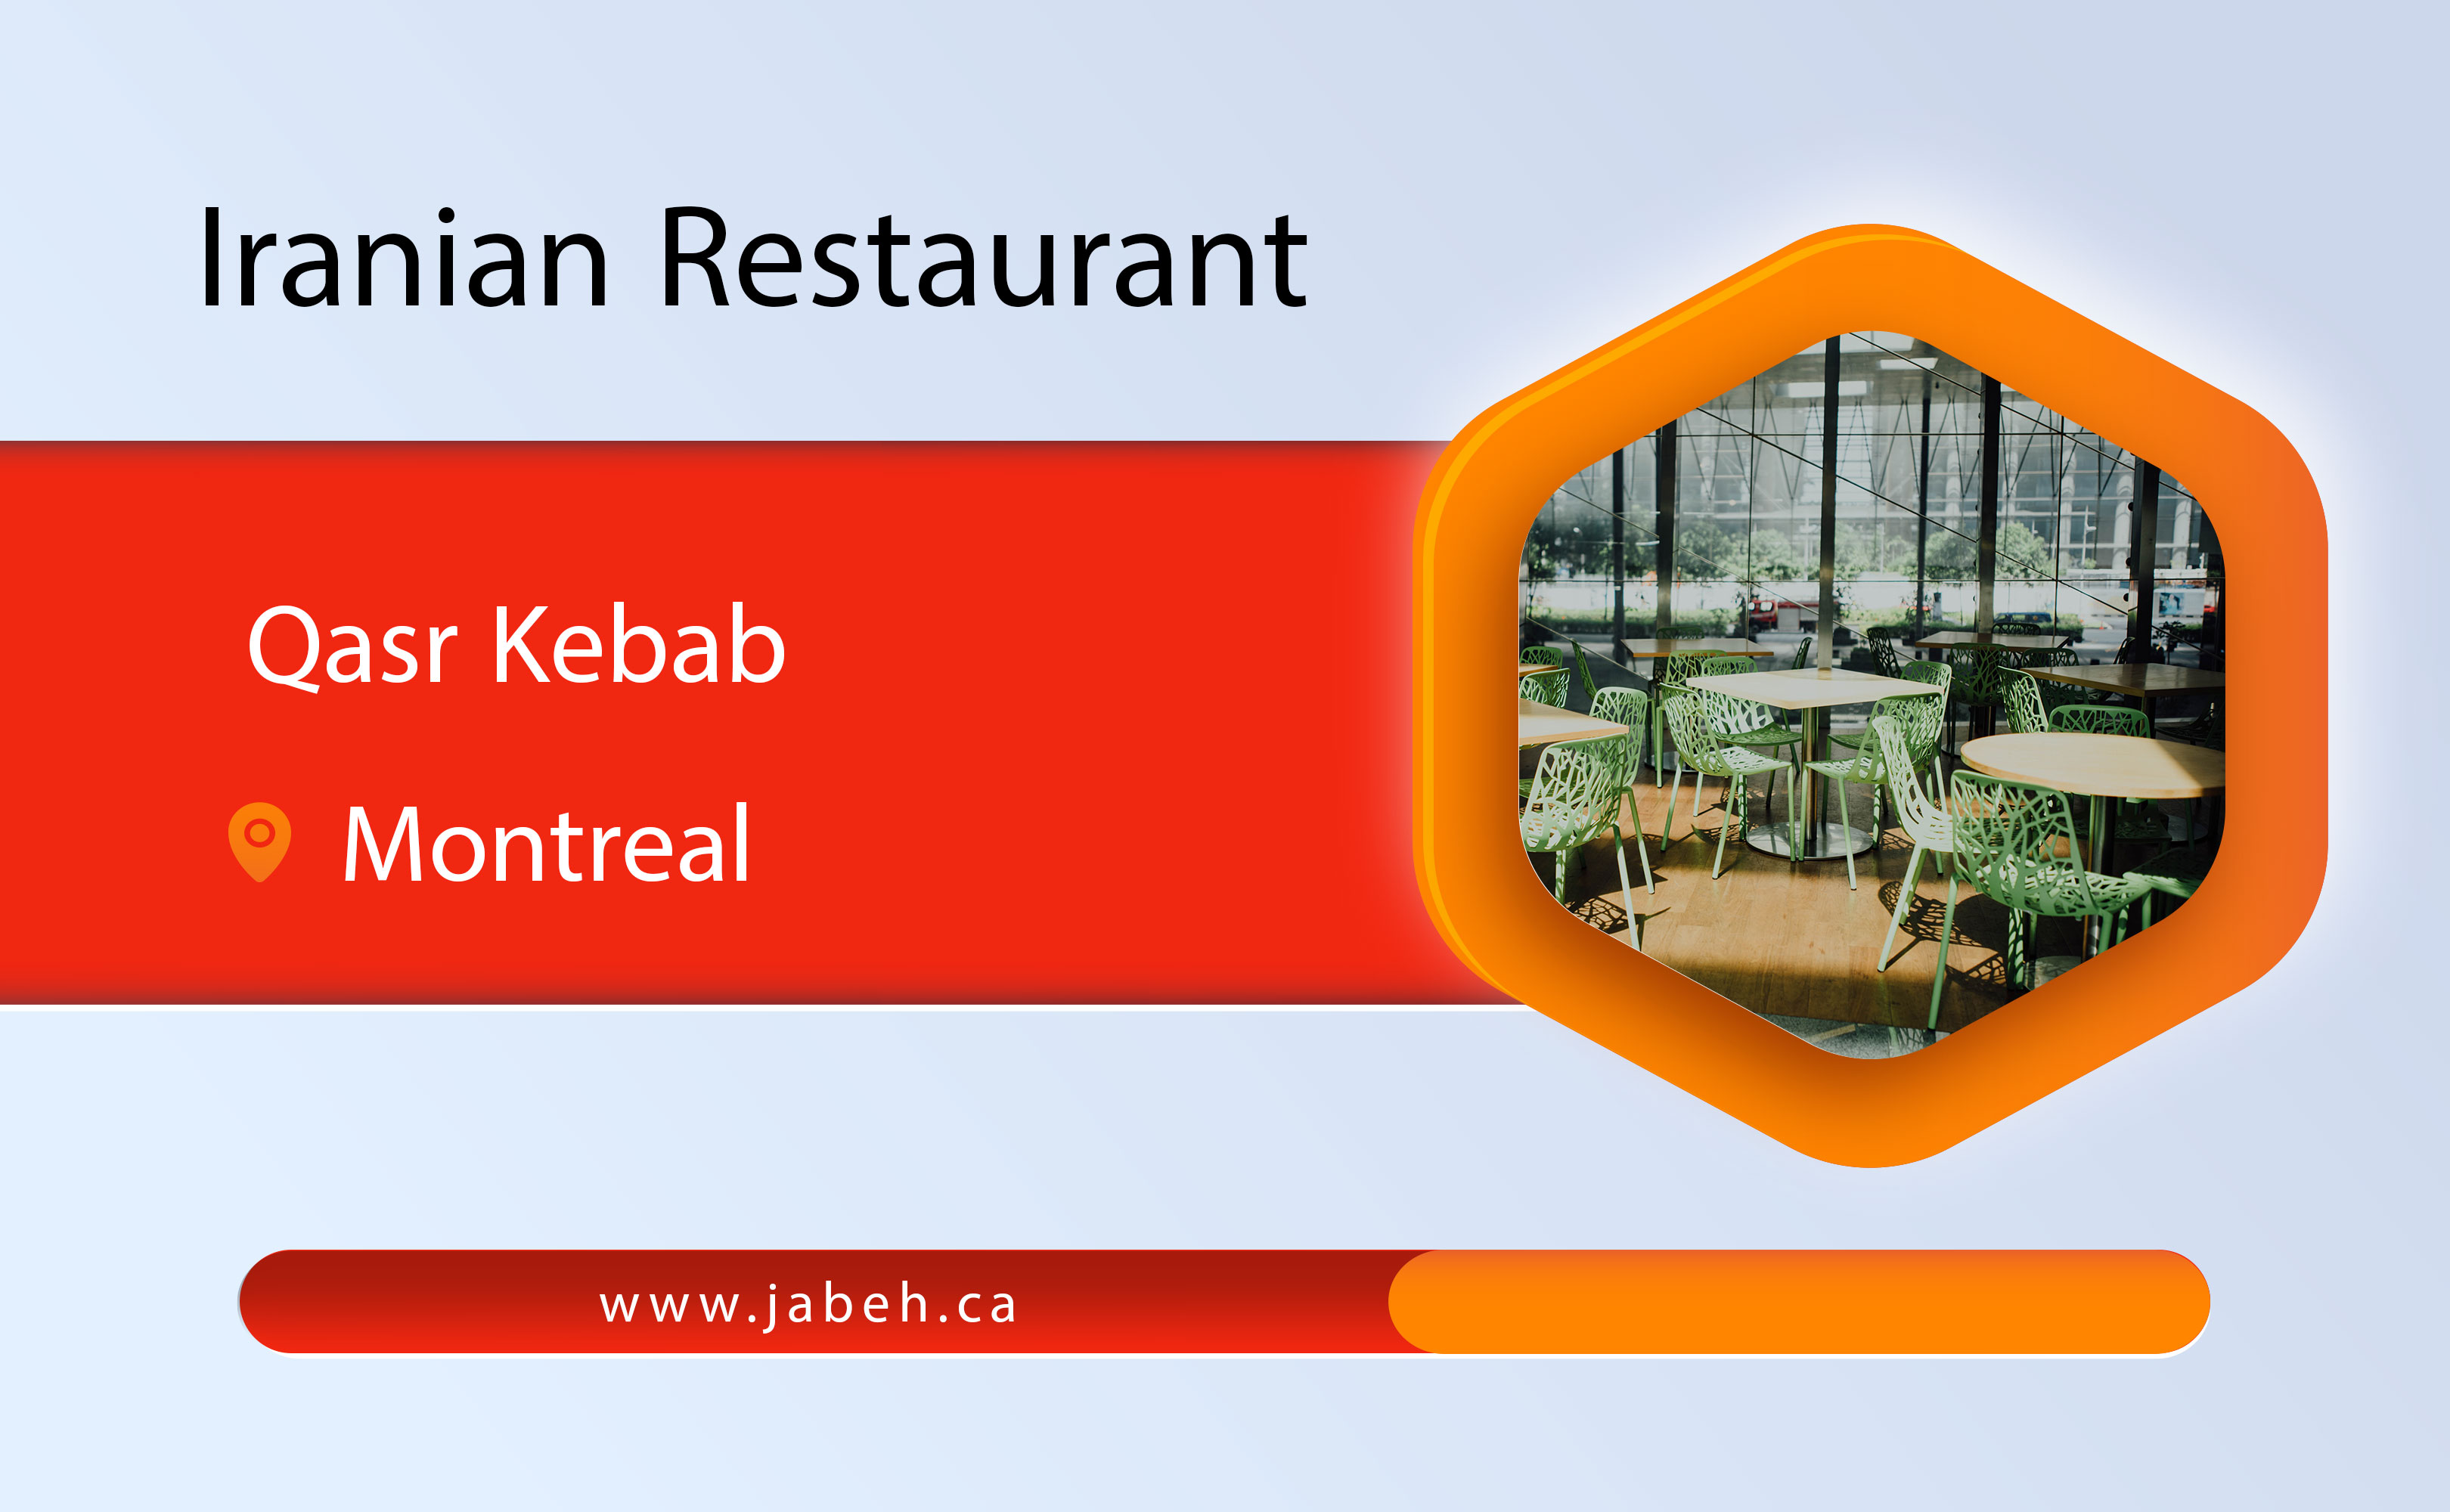 Qasr Kebab Iranian Restaurant in Vancouver